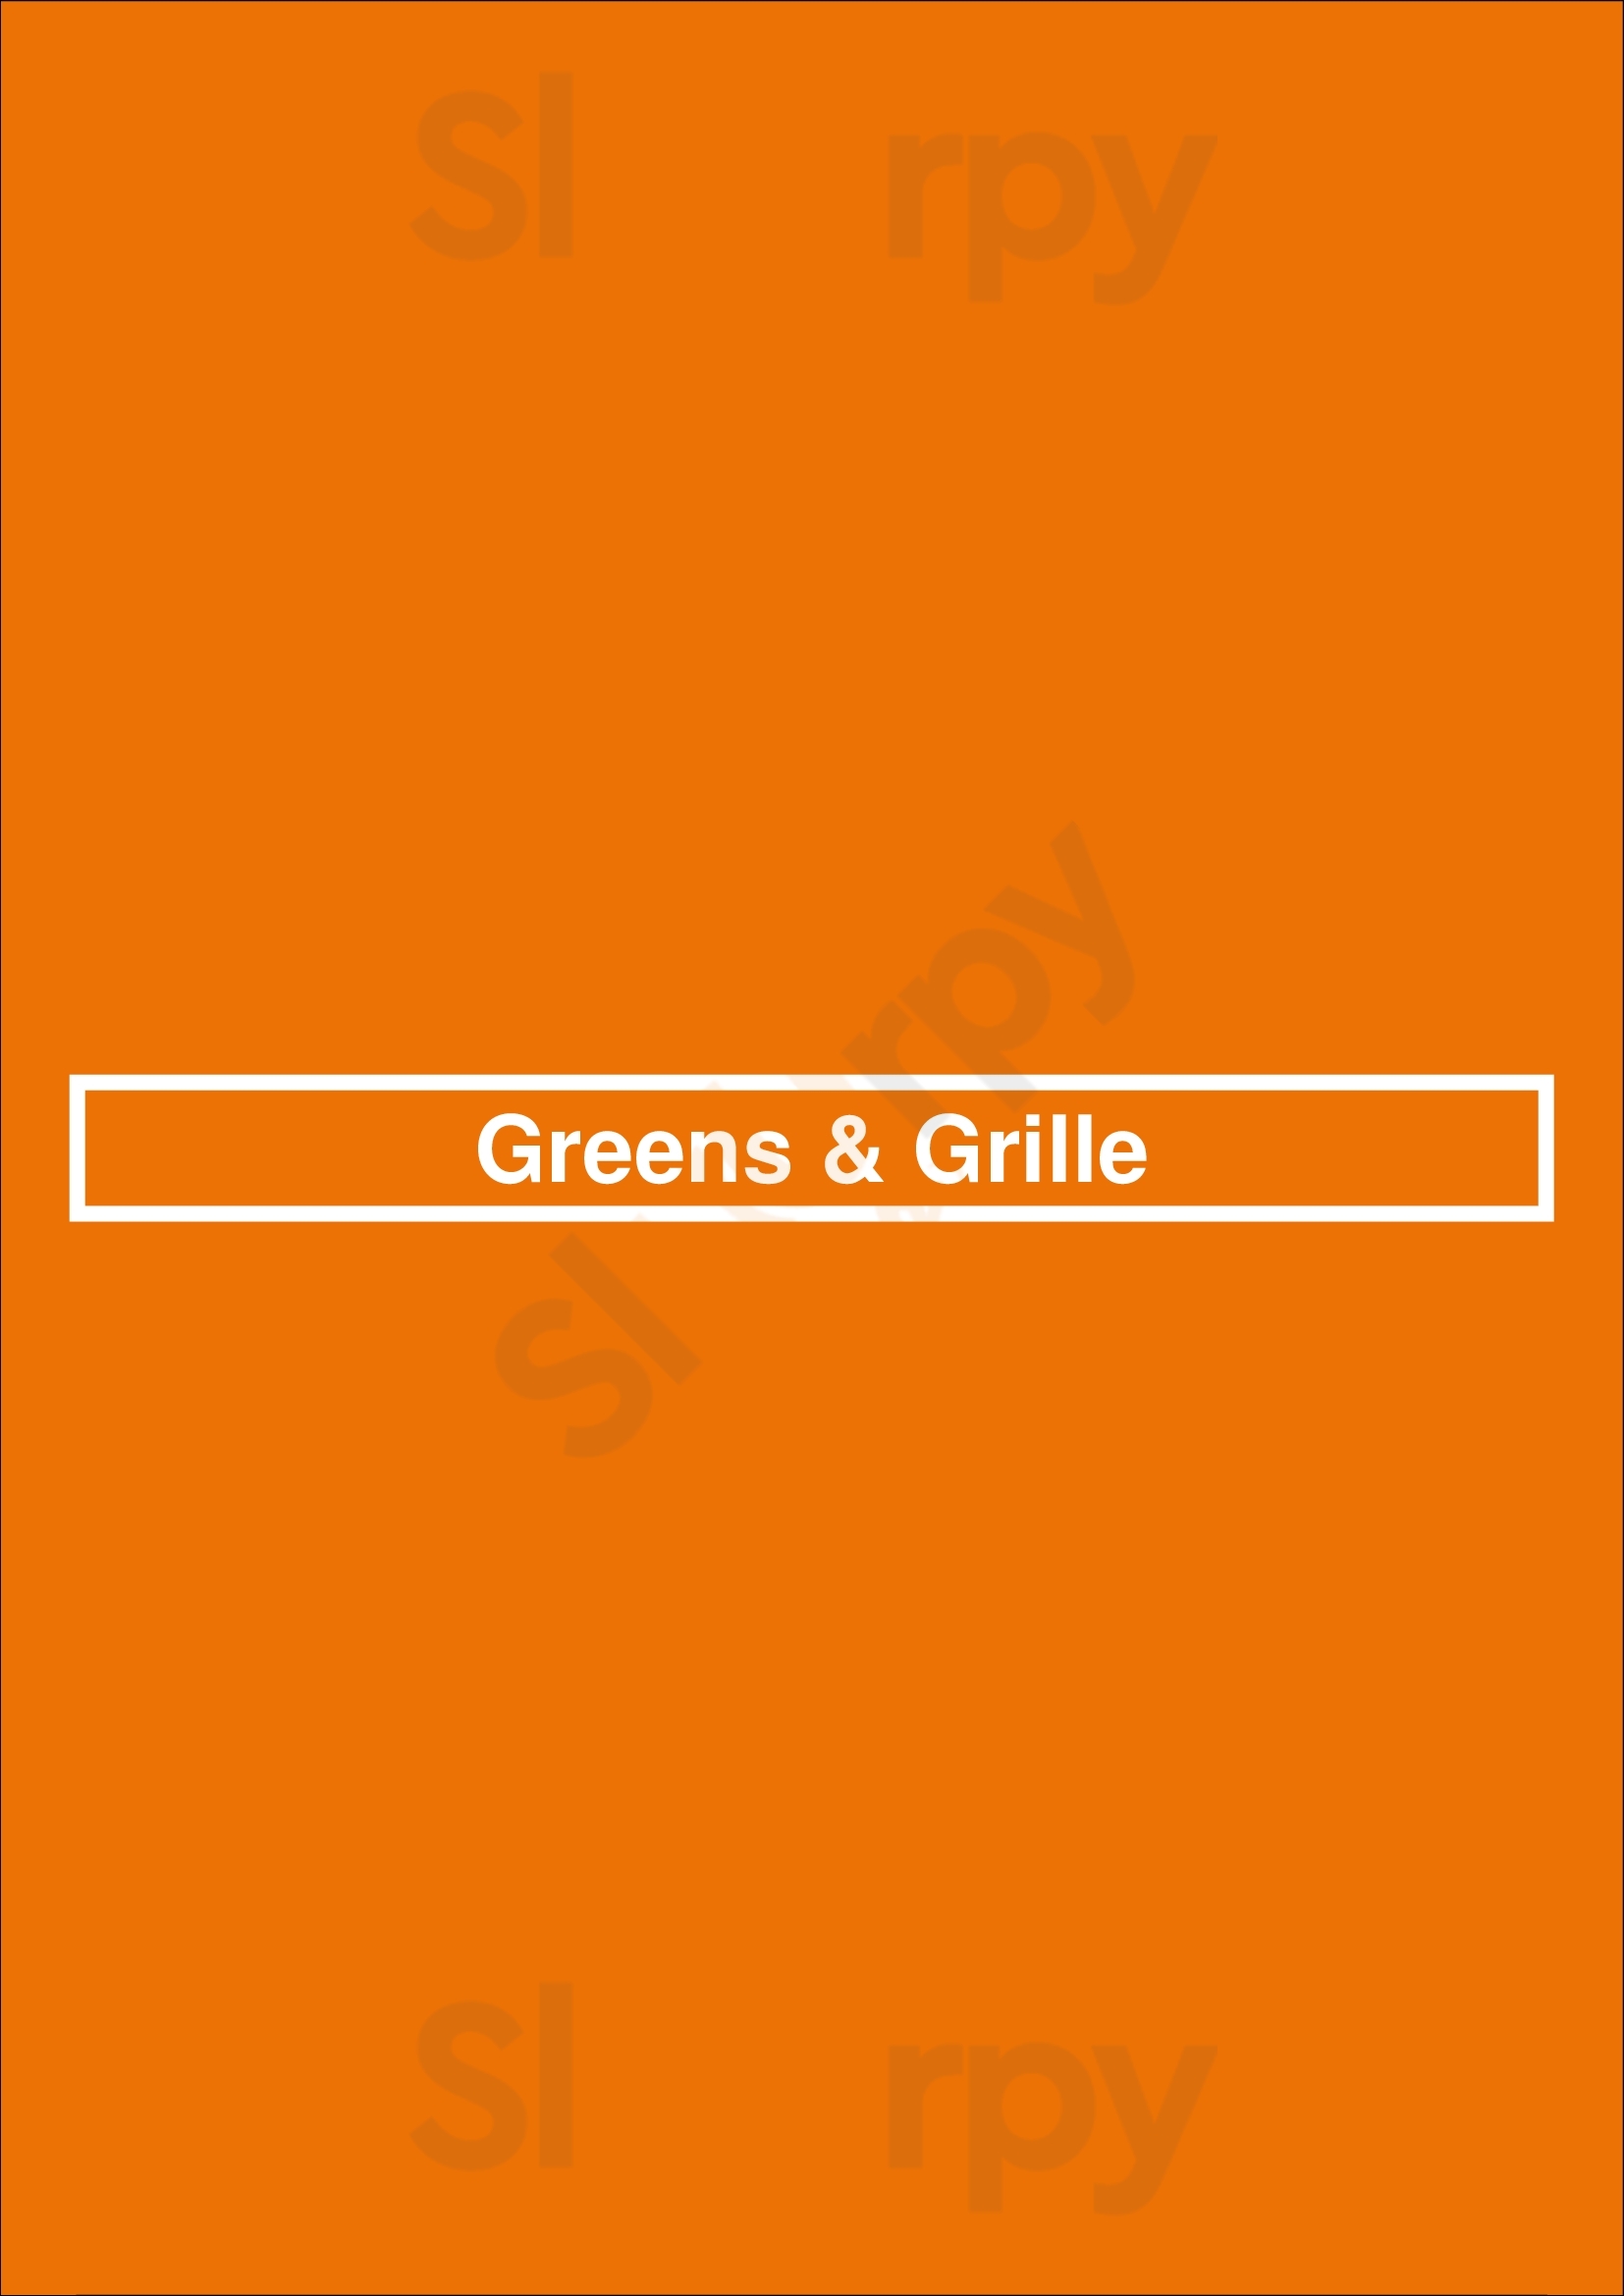 Greens & Grille Orlando Menu - 1